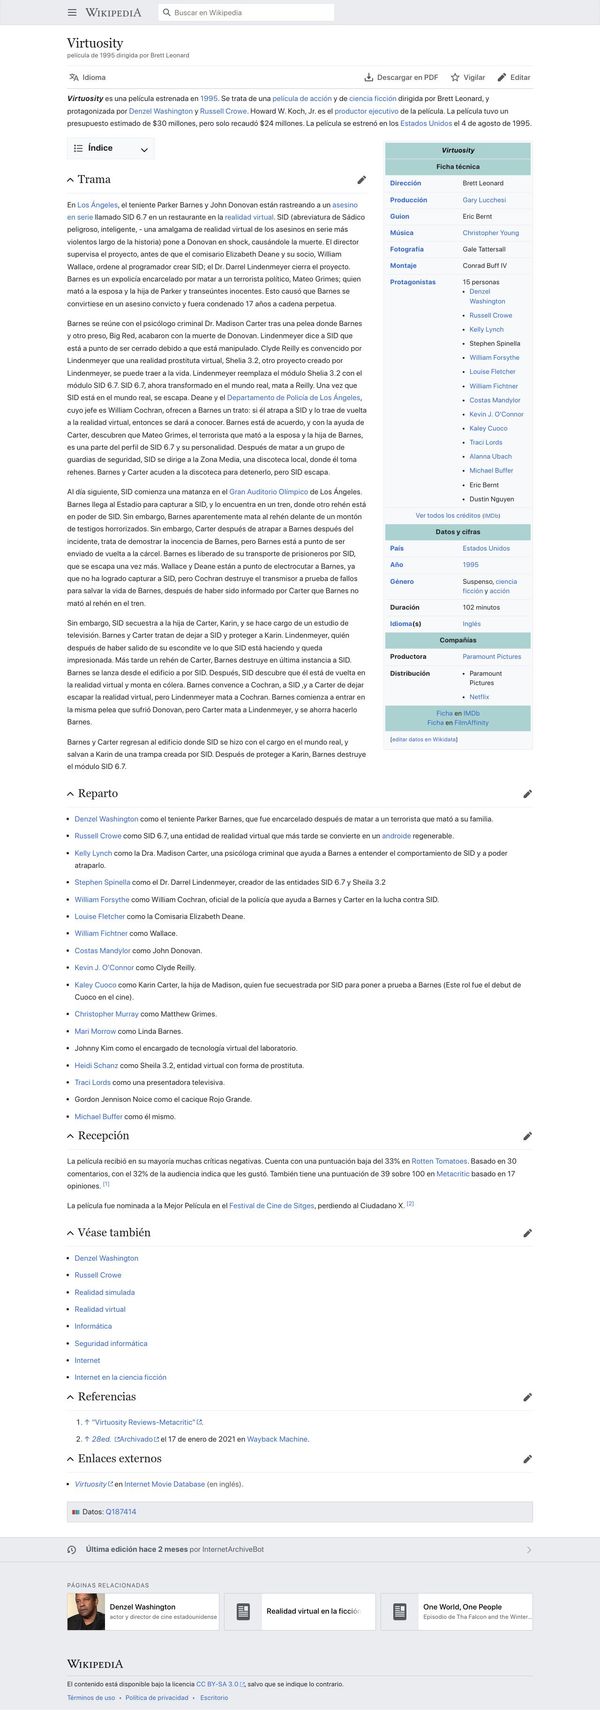 Virtuosity - Wikipedia, la enciclopedia libre